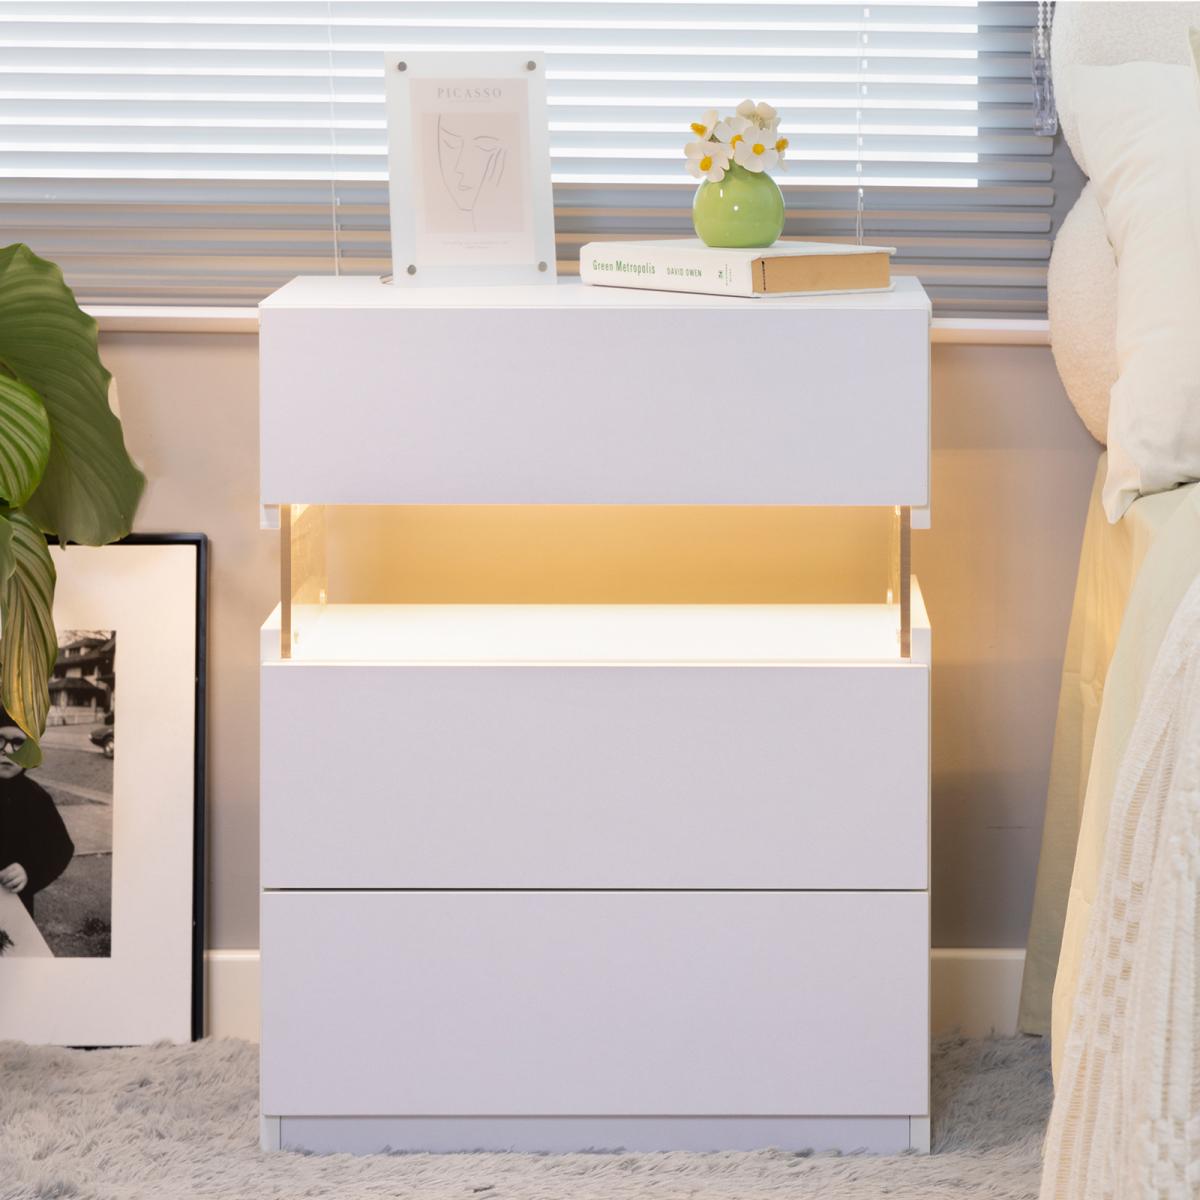 LED Nightstands 3 Drawer Dresser for Bedroom End Table with Acrylic Board Led Bedside Tables for Bedroom Living Room Bedside Furniture (White)